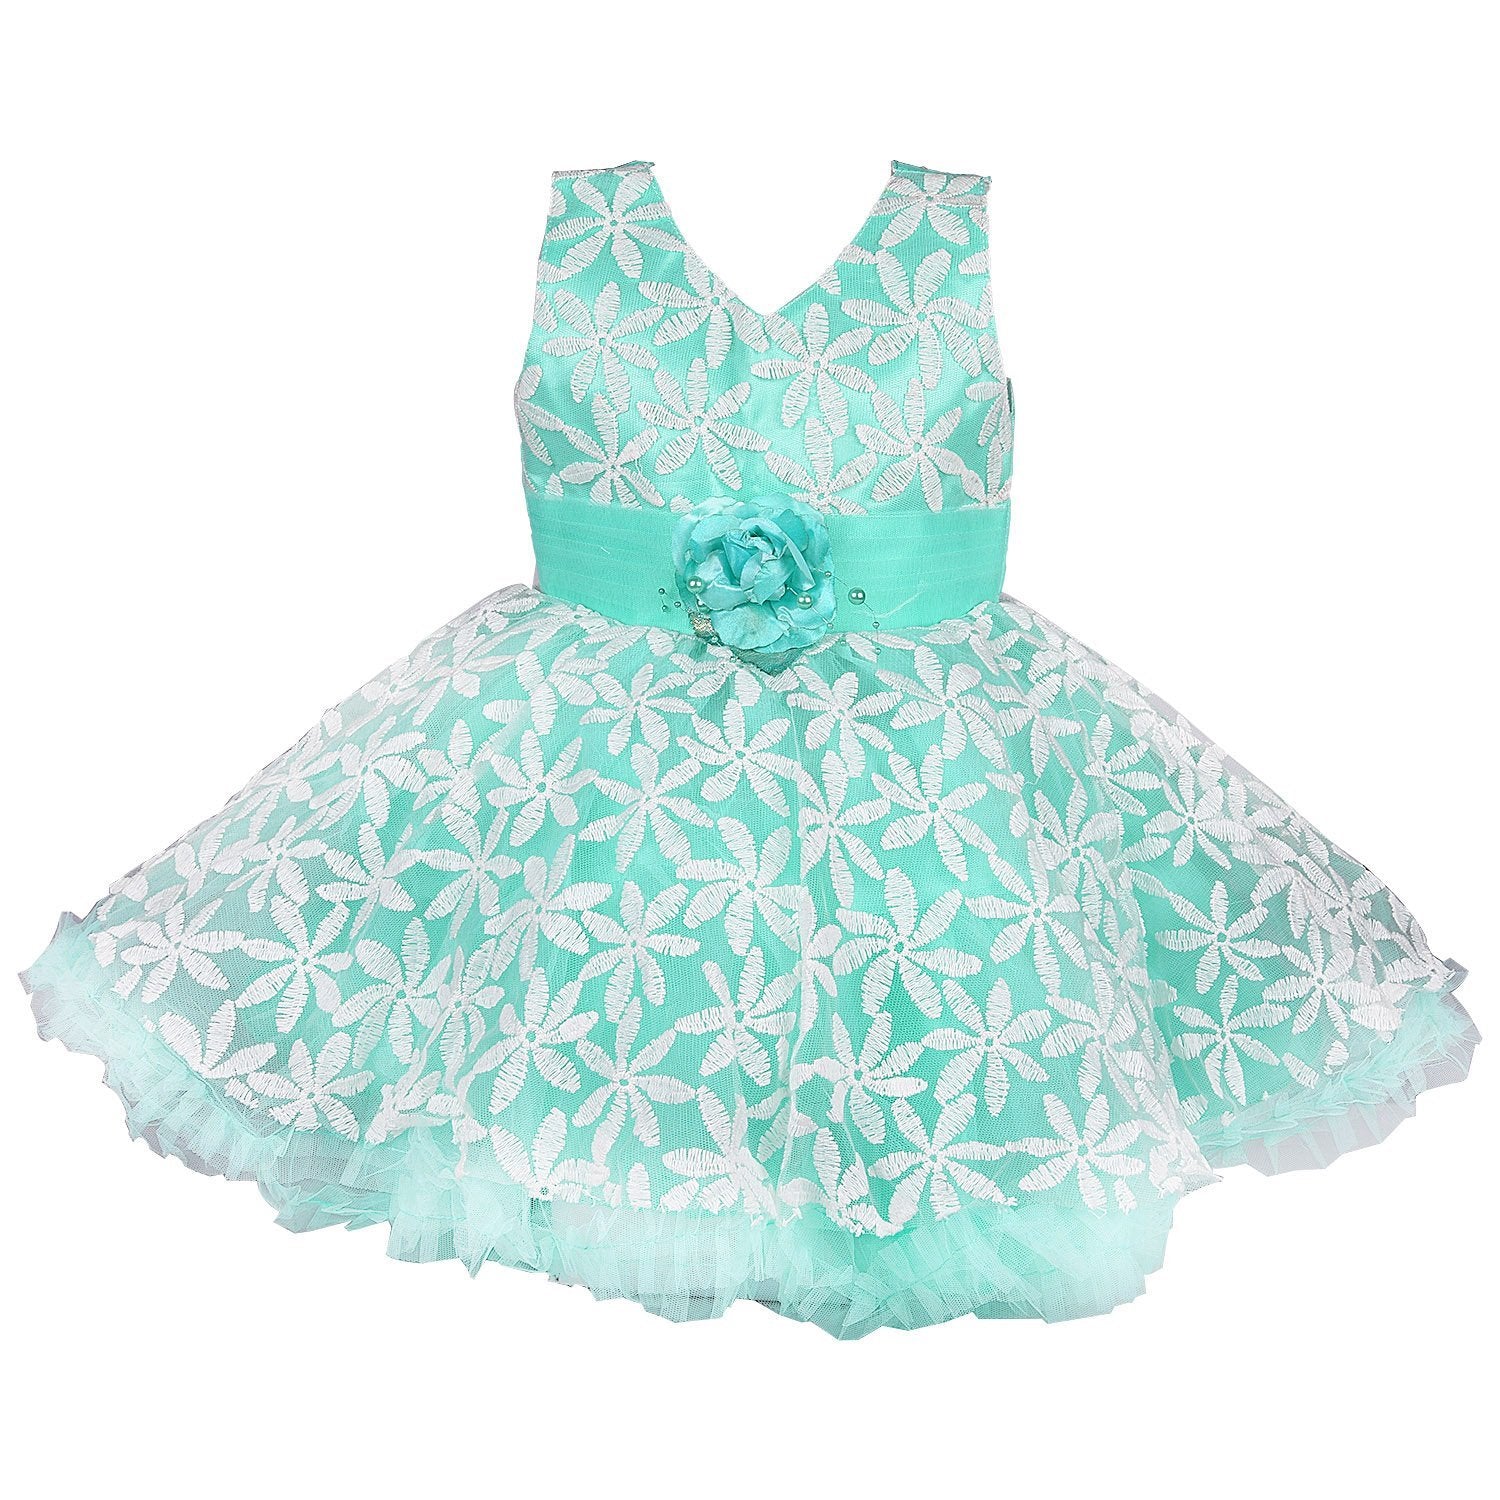 Baby Girls party wear Frock Dress Fe 2433 - Wish Karo Party Wear - frocks Party Wear - baby dress